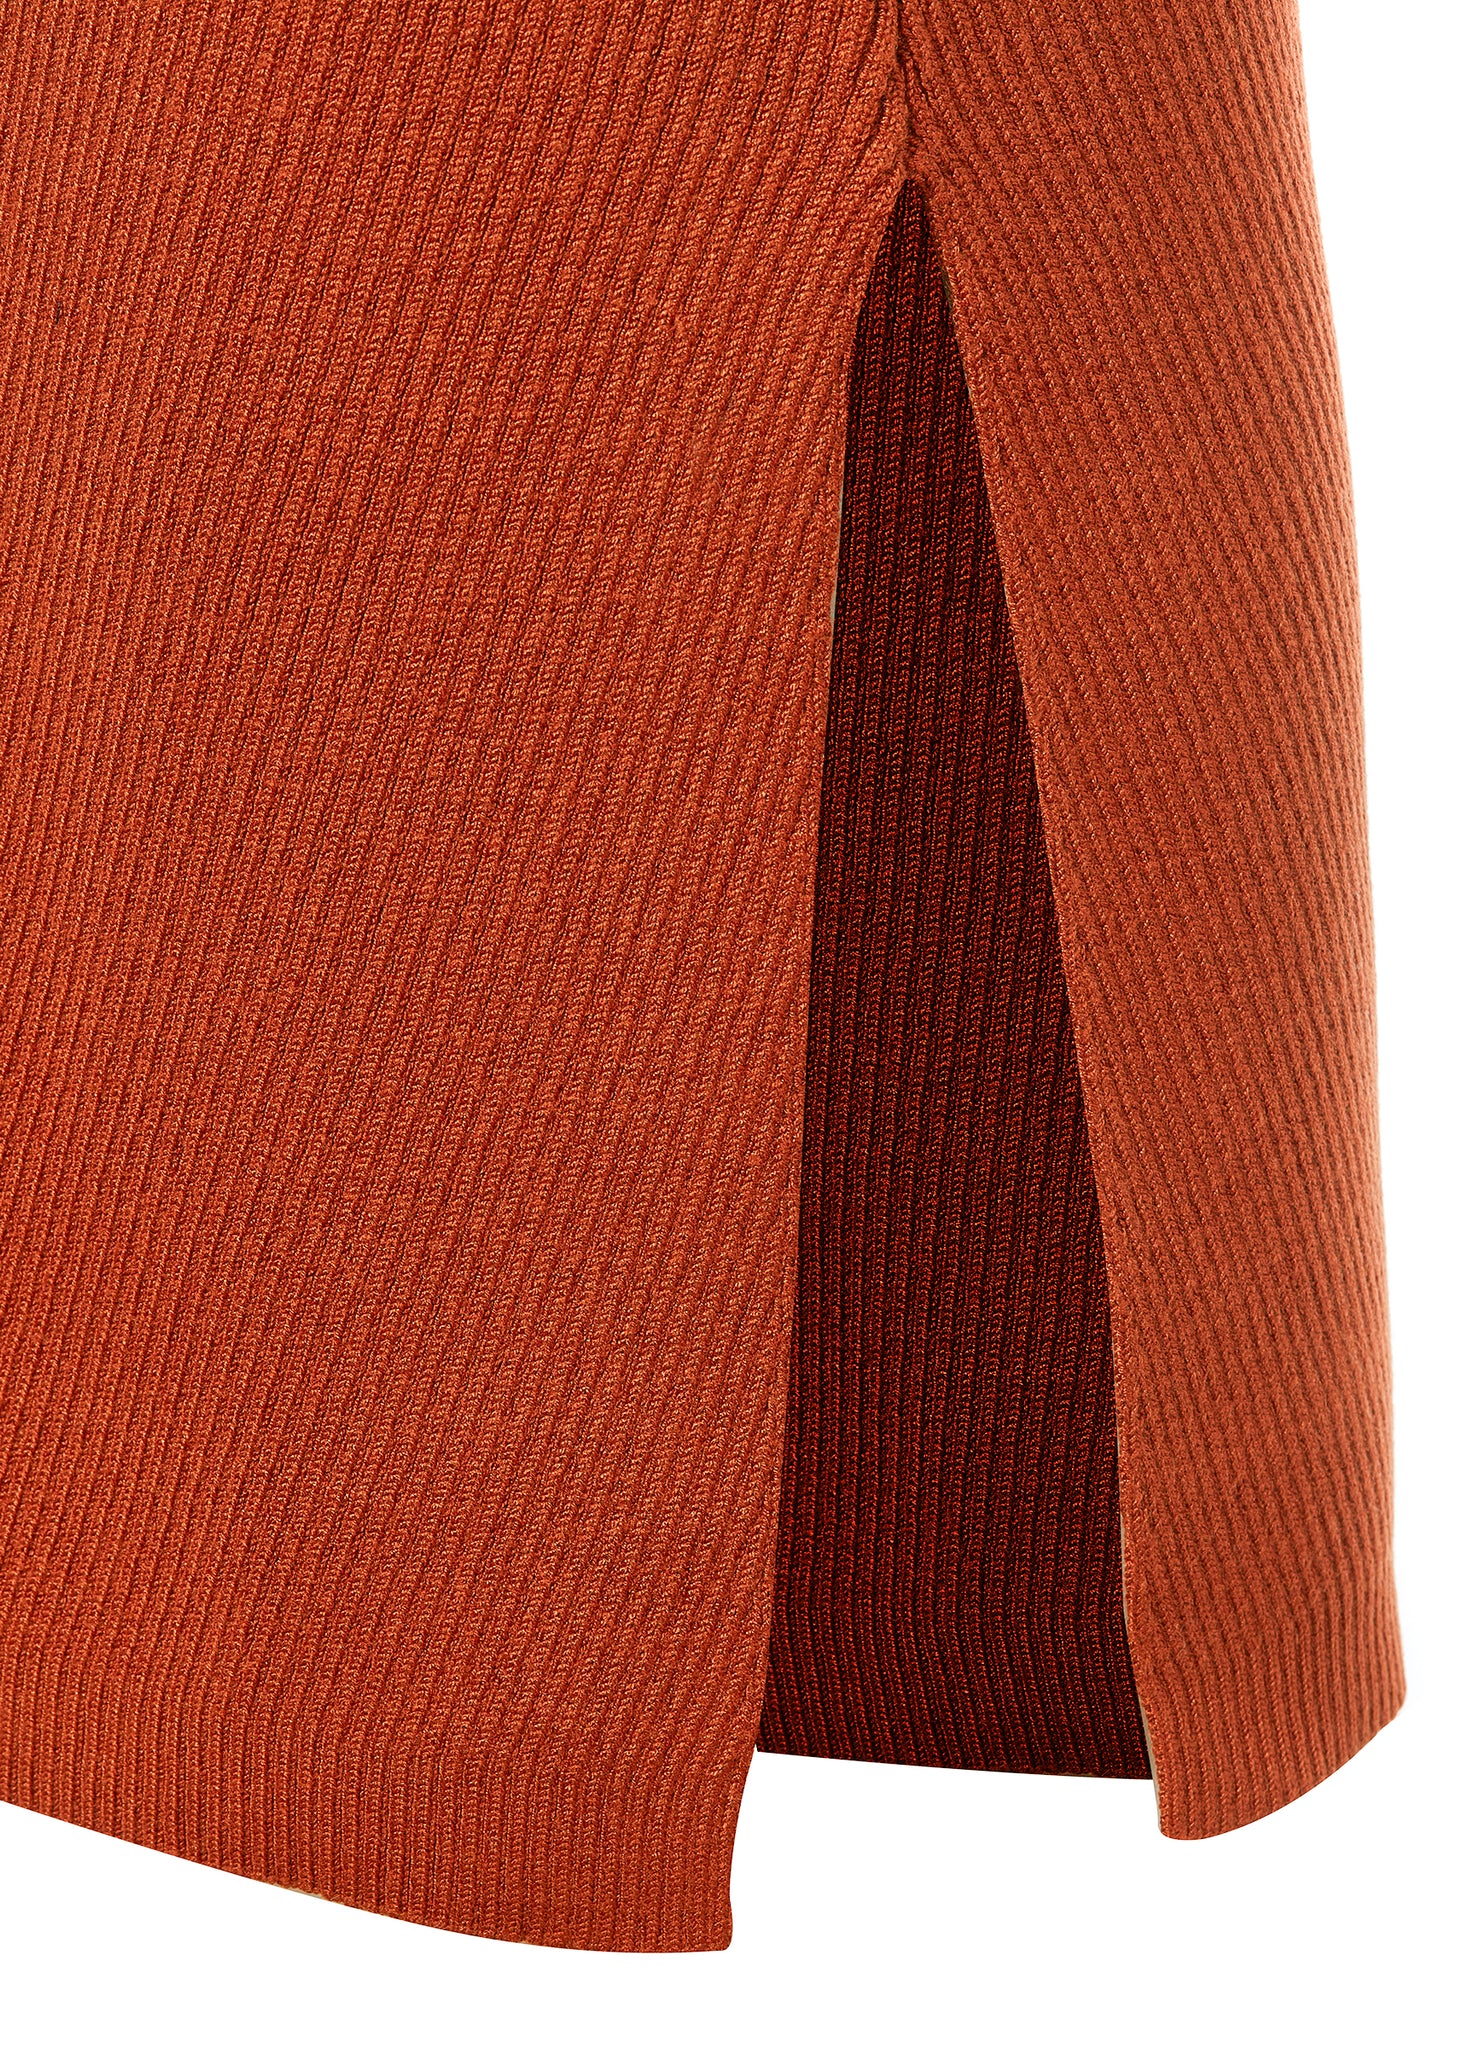 detailed shot of side slit on womens ribbed orange v neck midi dress with gold buttons on shoulder and tan leather sliders